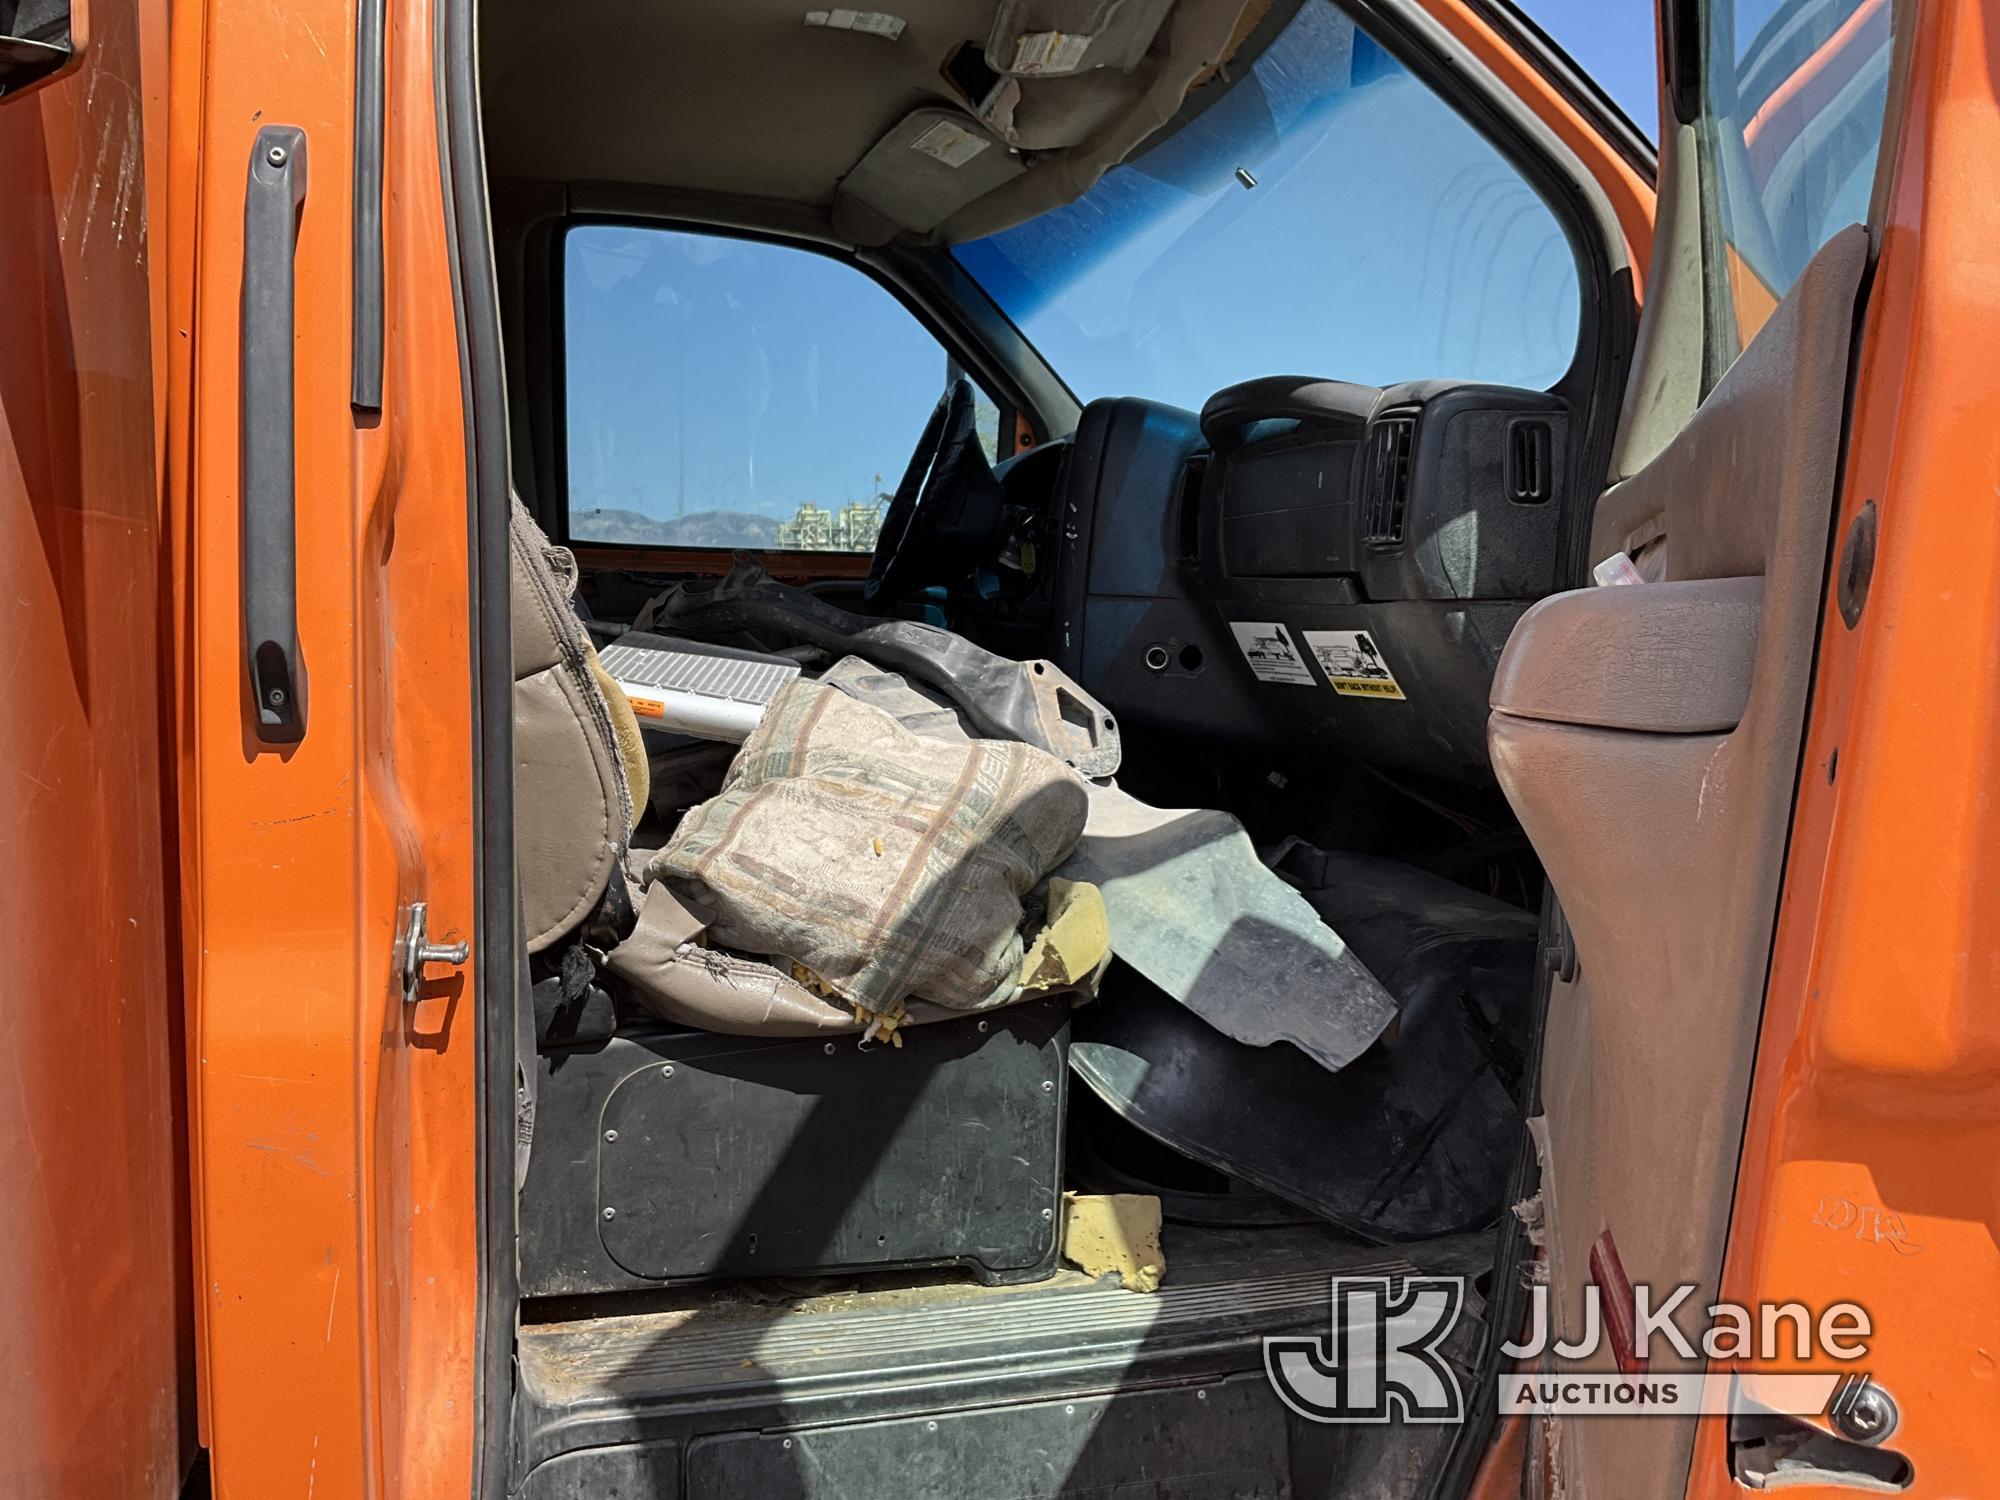 (Albuquerque, NM) 2005 GMC C6500 Chipper Dump Truck Not Running, Condition Unknown, Parts Missing) (